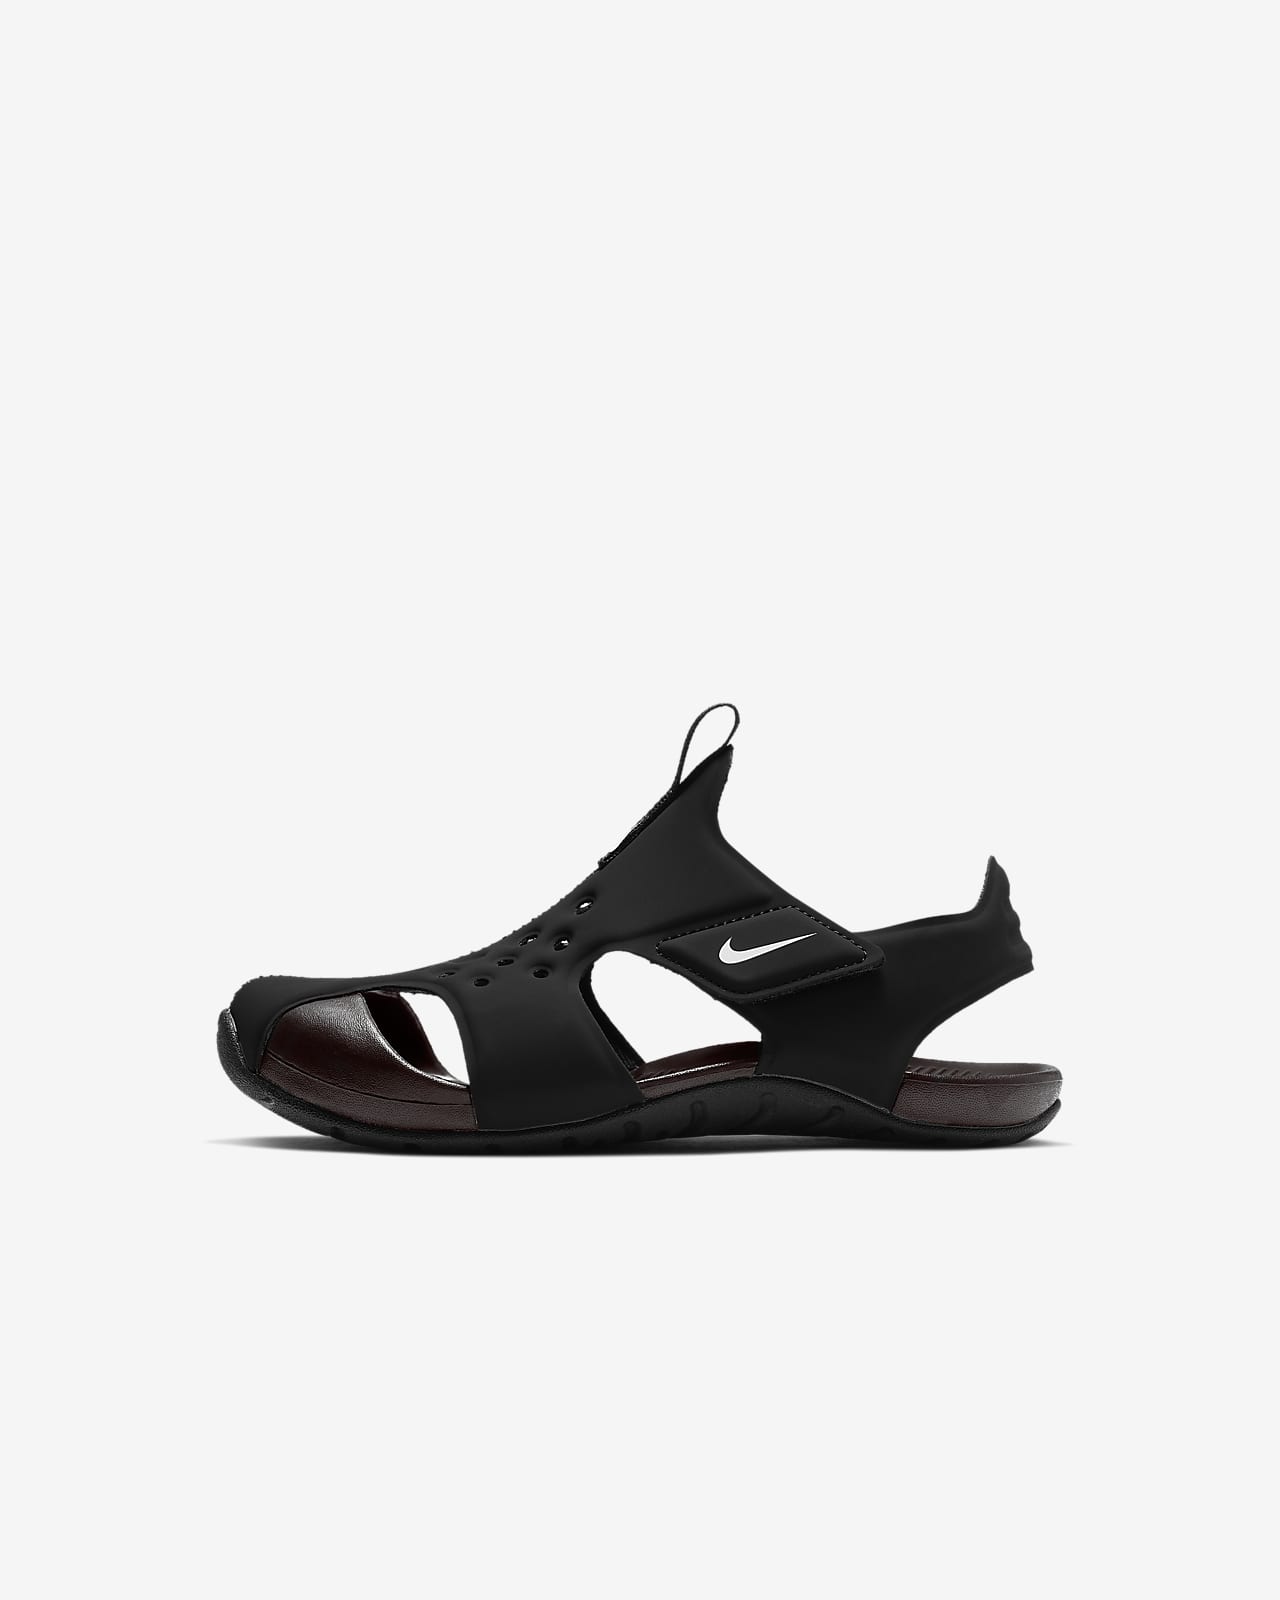 Nike Sunray Protect 2 Sandale für 